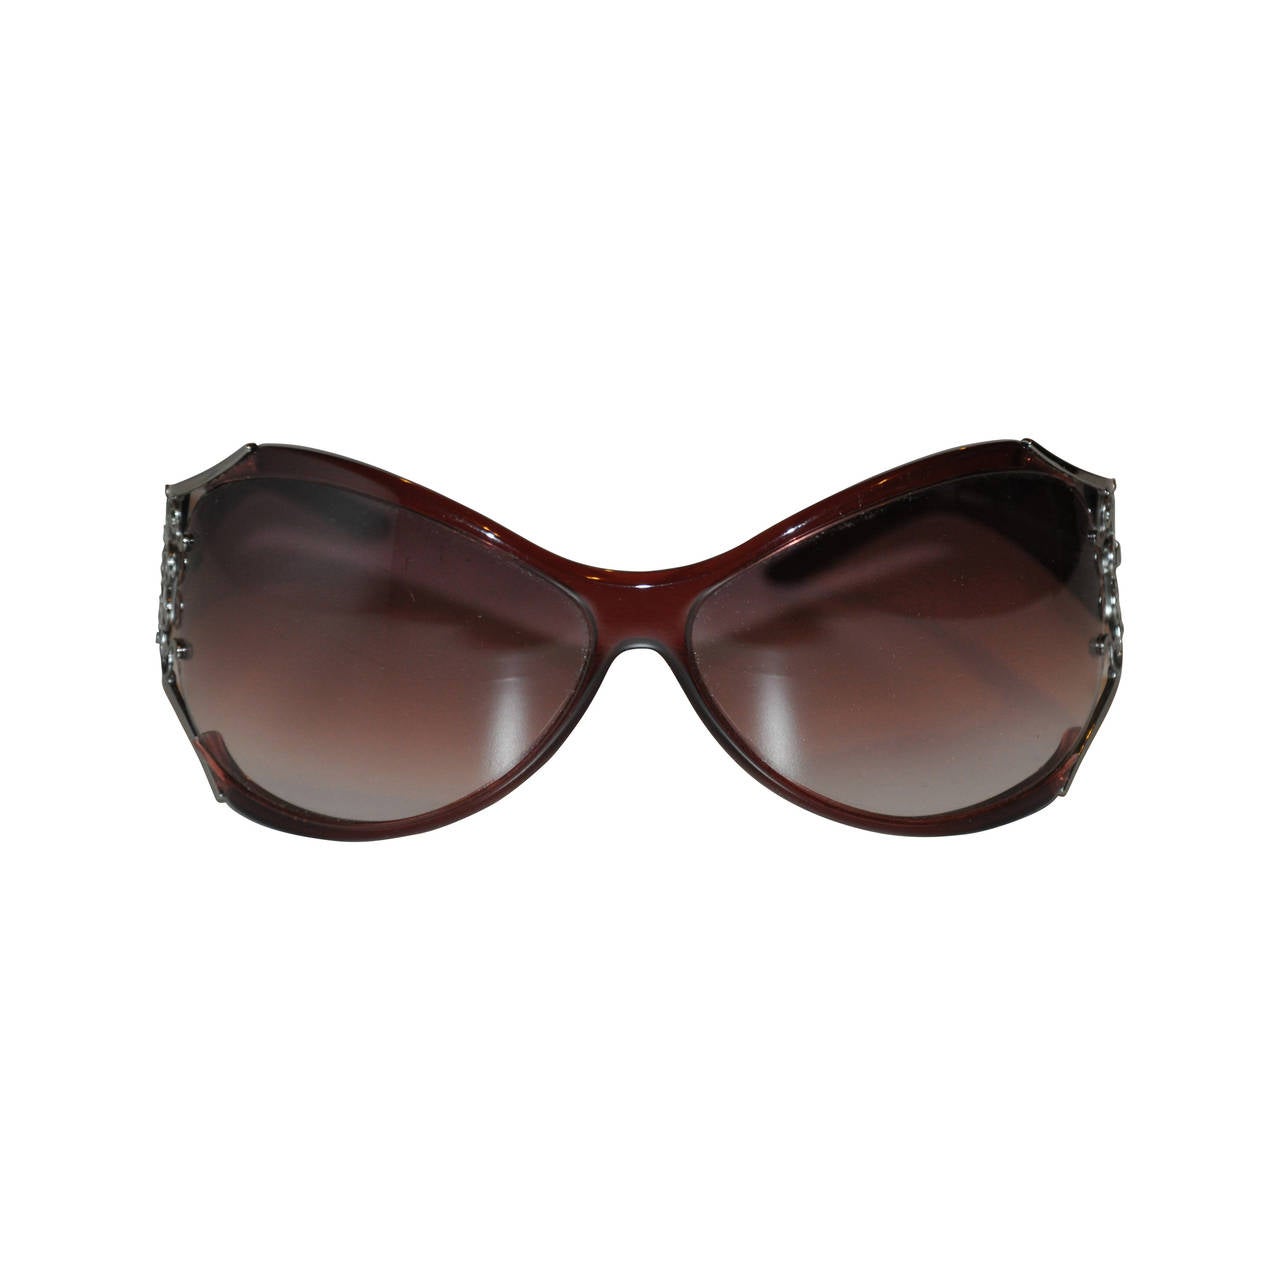 Yves Saint Laurent Violet Lucite "Swirls" Hardware Accent Sunglasses